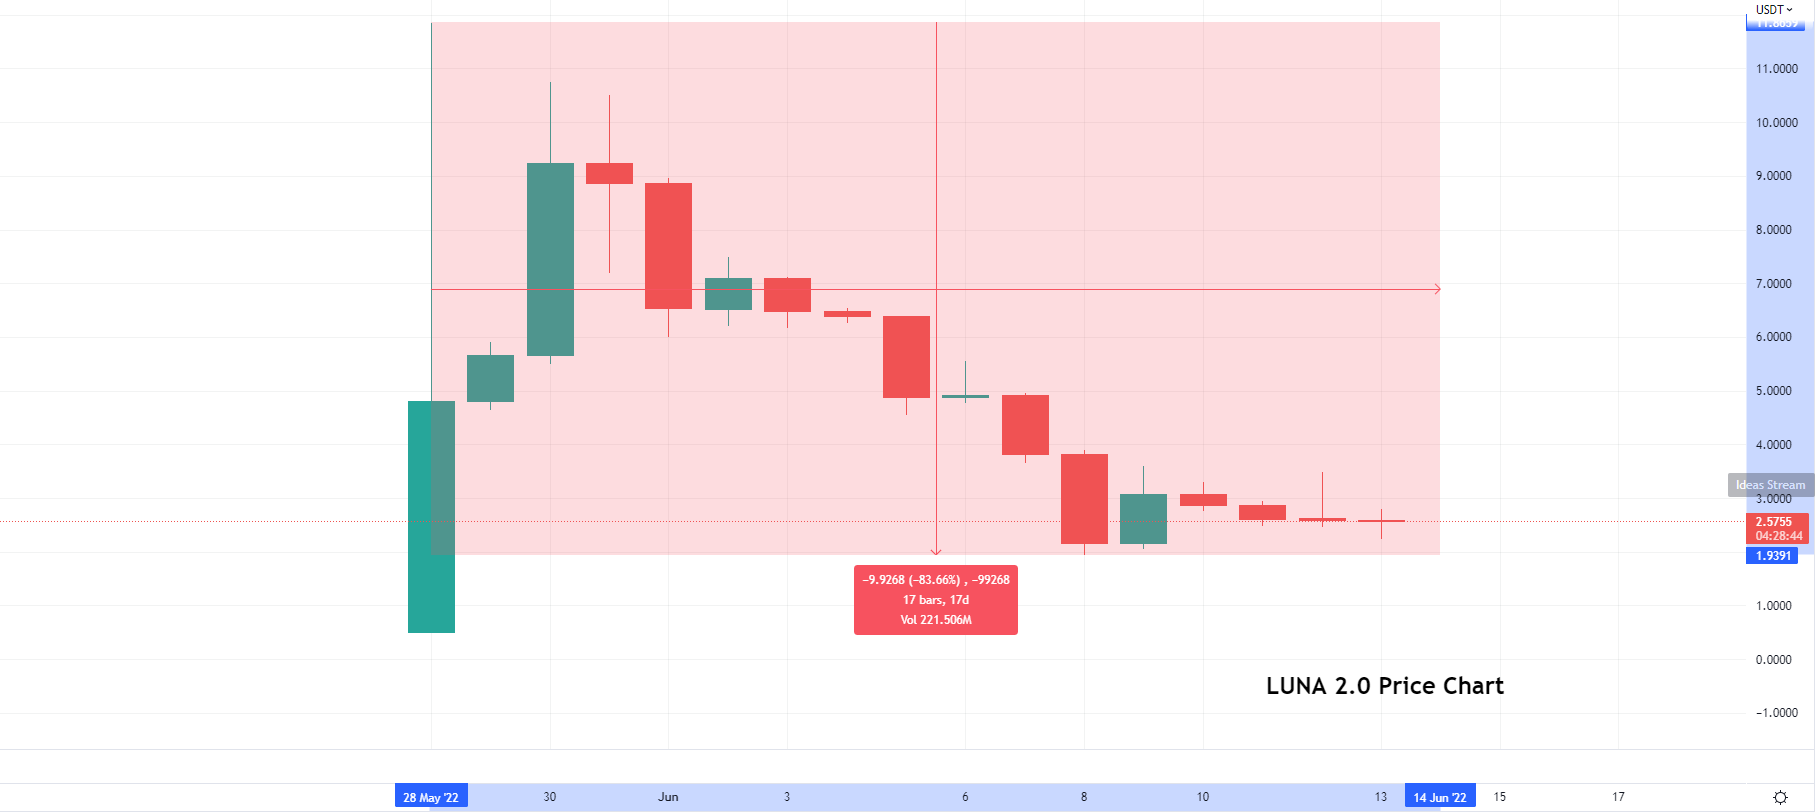 LUNA Price Chart